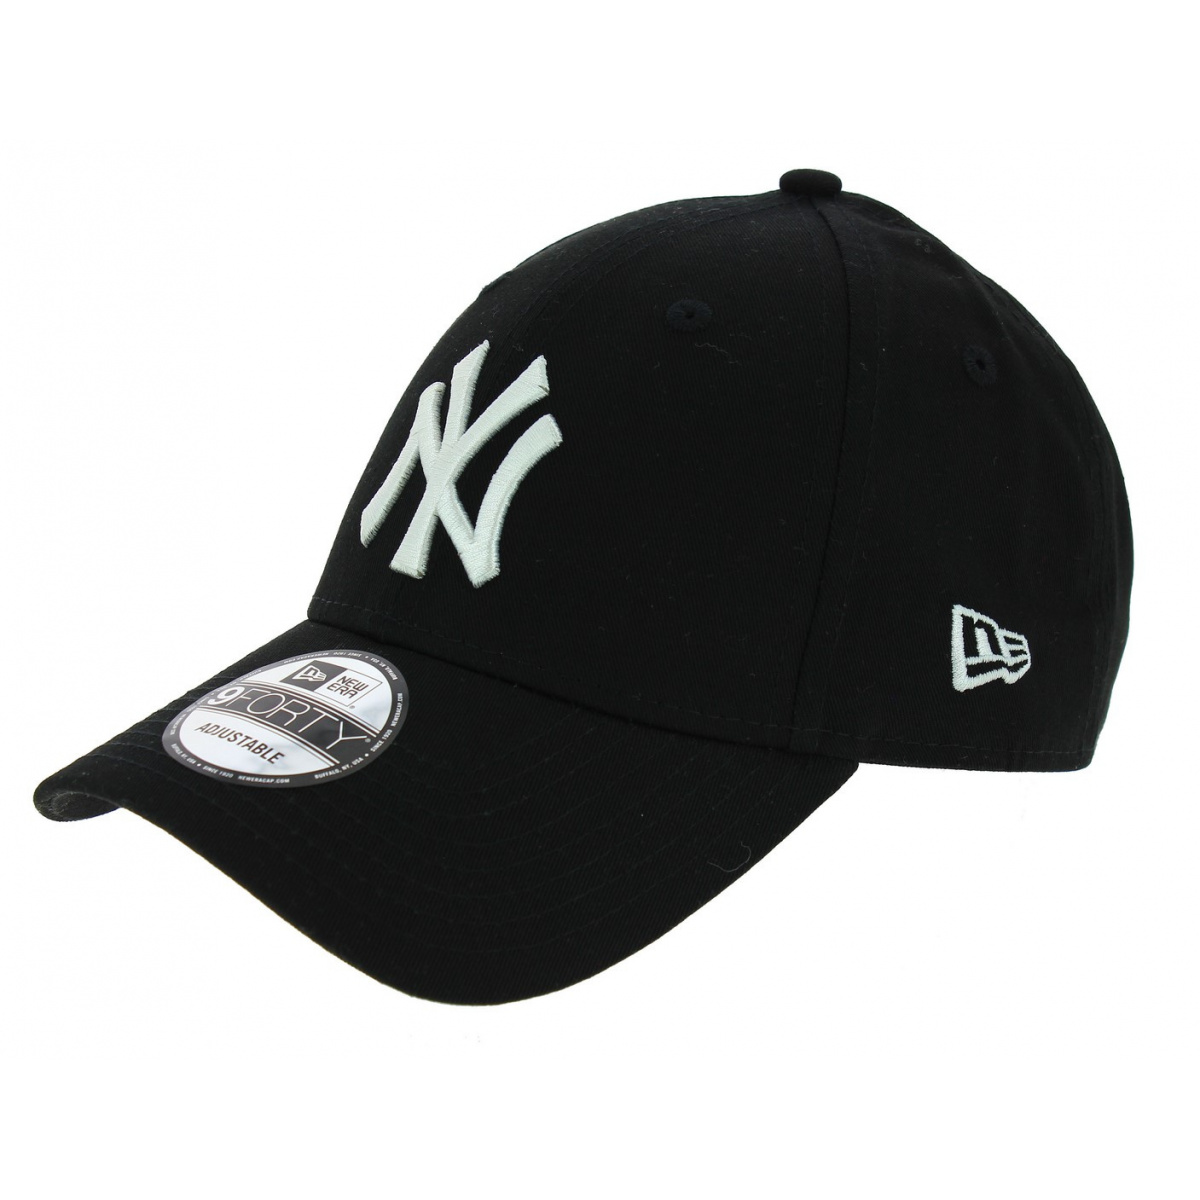 MLB Casquettes de baseball, MLB Casquettes, Baseball Chapeau, bonnets